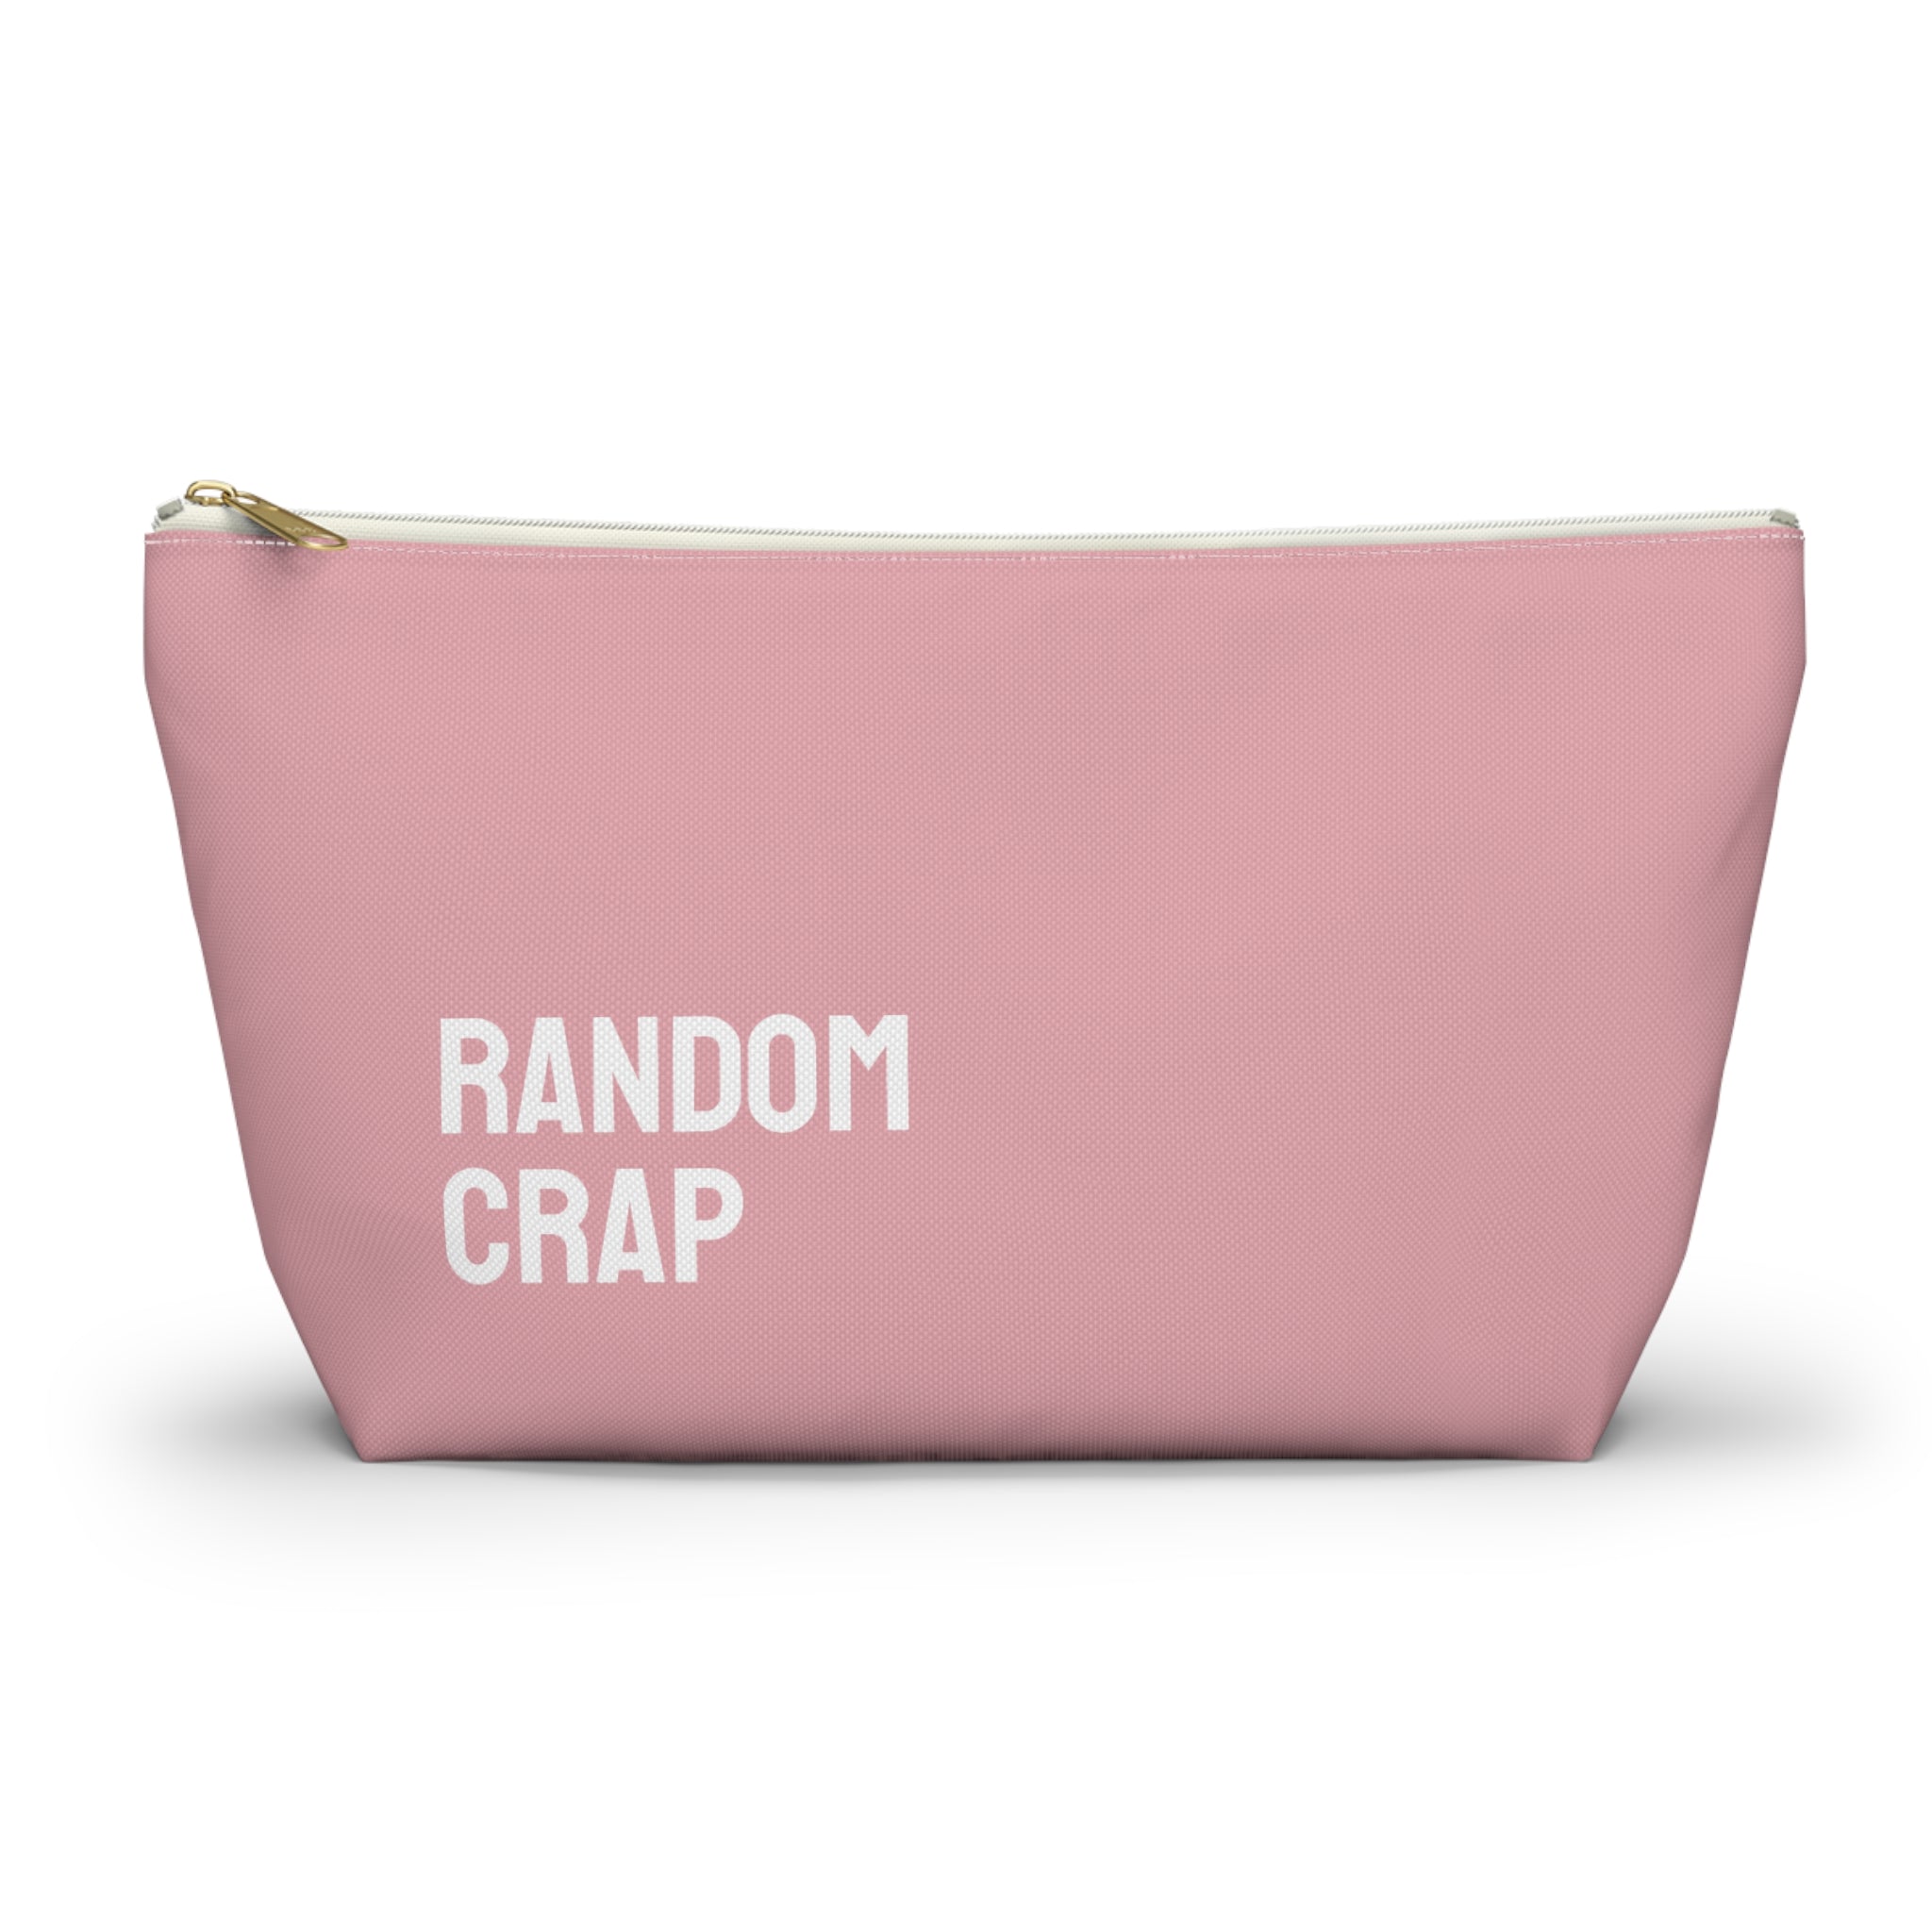 Random crap Pouch (Pink)